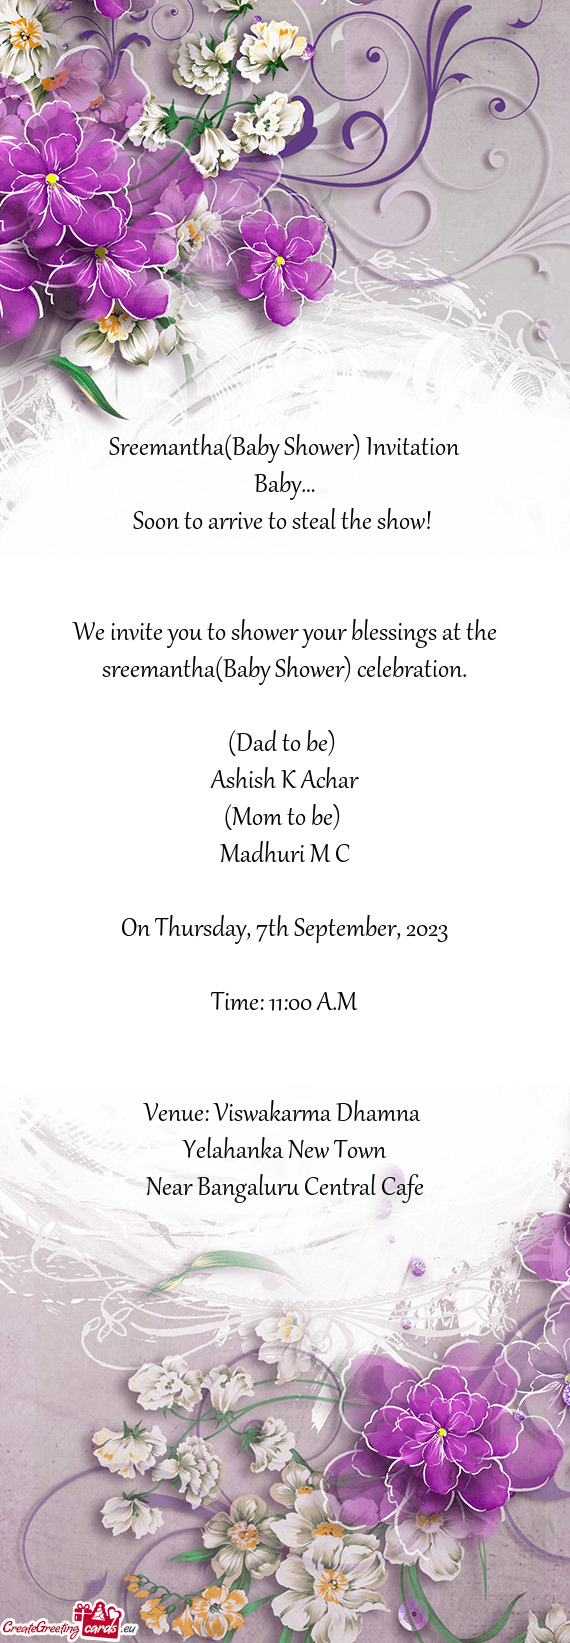 Sreemantha(Baby Shower) Invitation